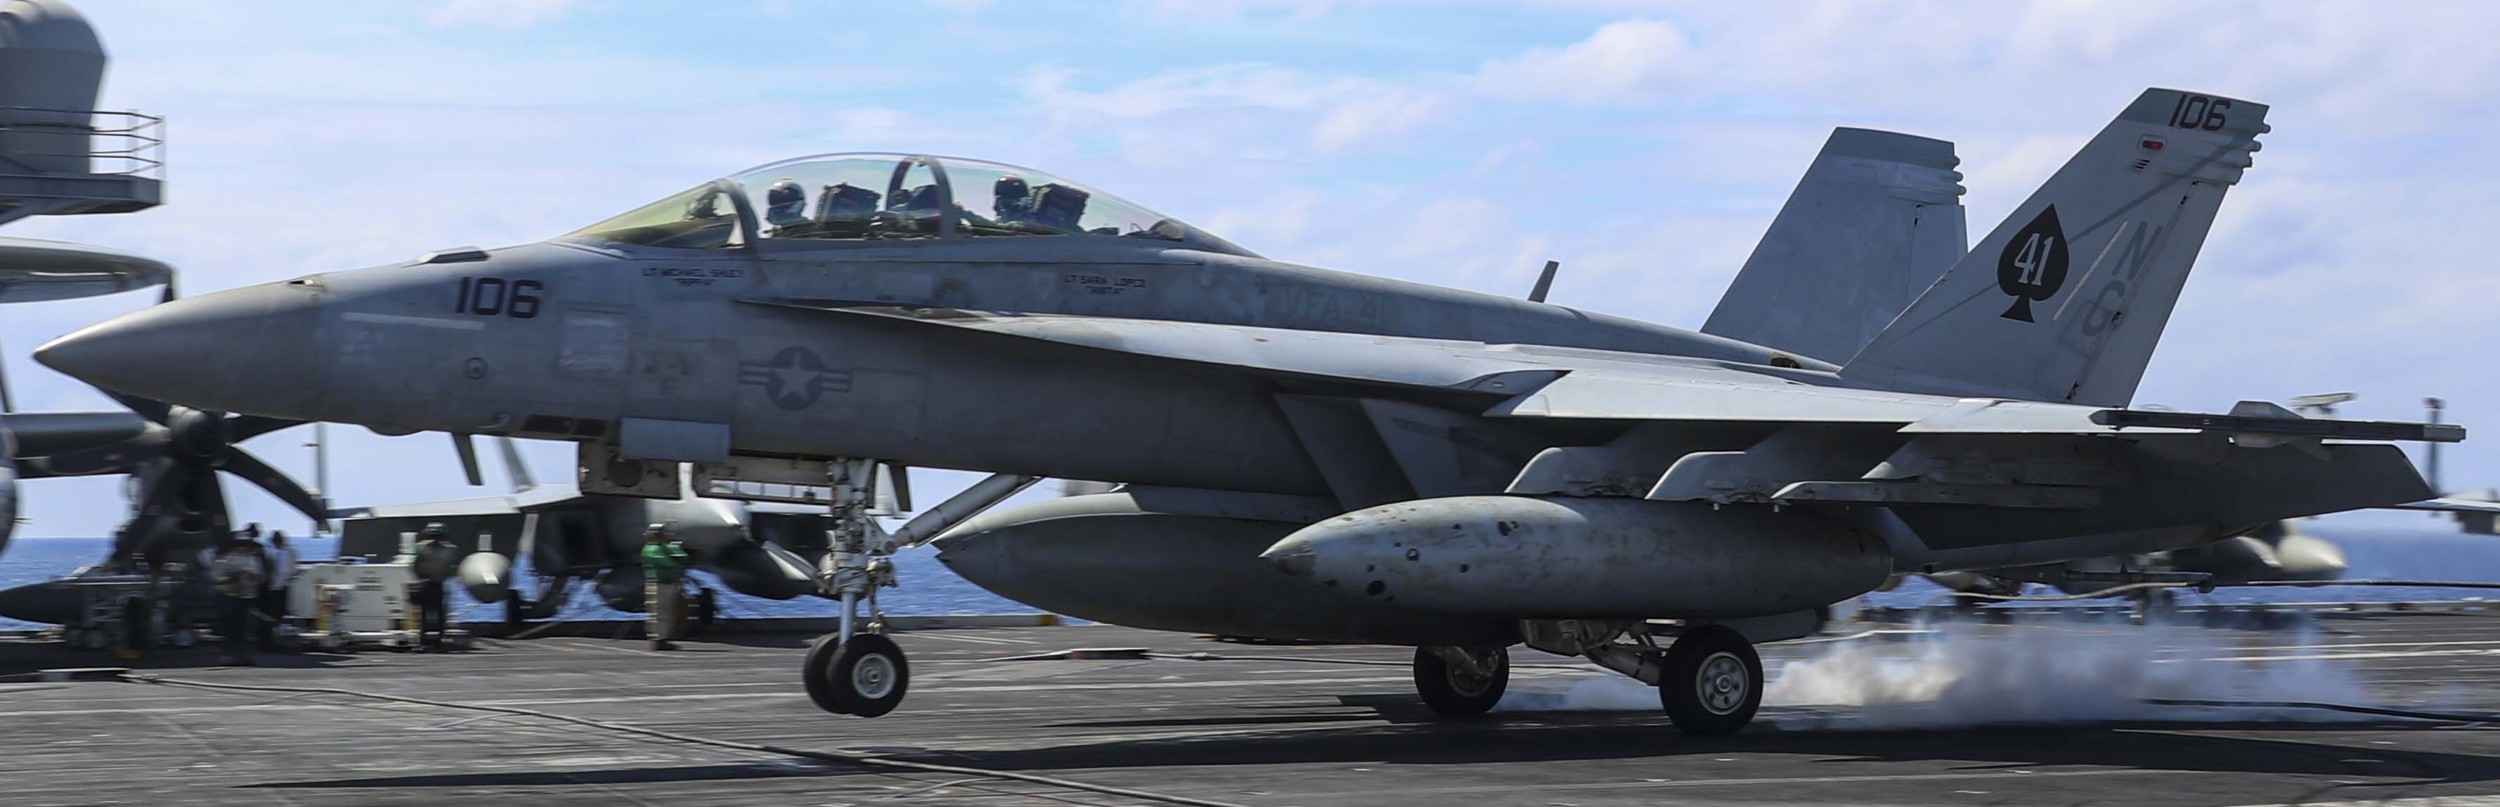 vfa-41 black aces strike fighter squadron f/a-18f super hornet cvw-9 cvn-72 uss abraham lincoln us navy 79